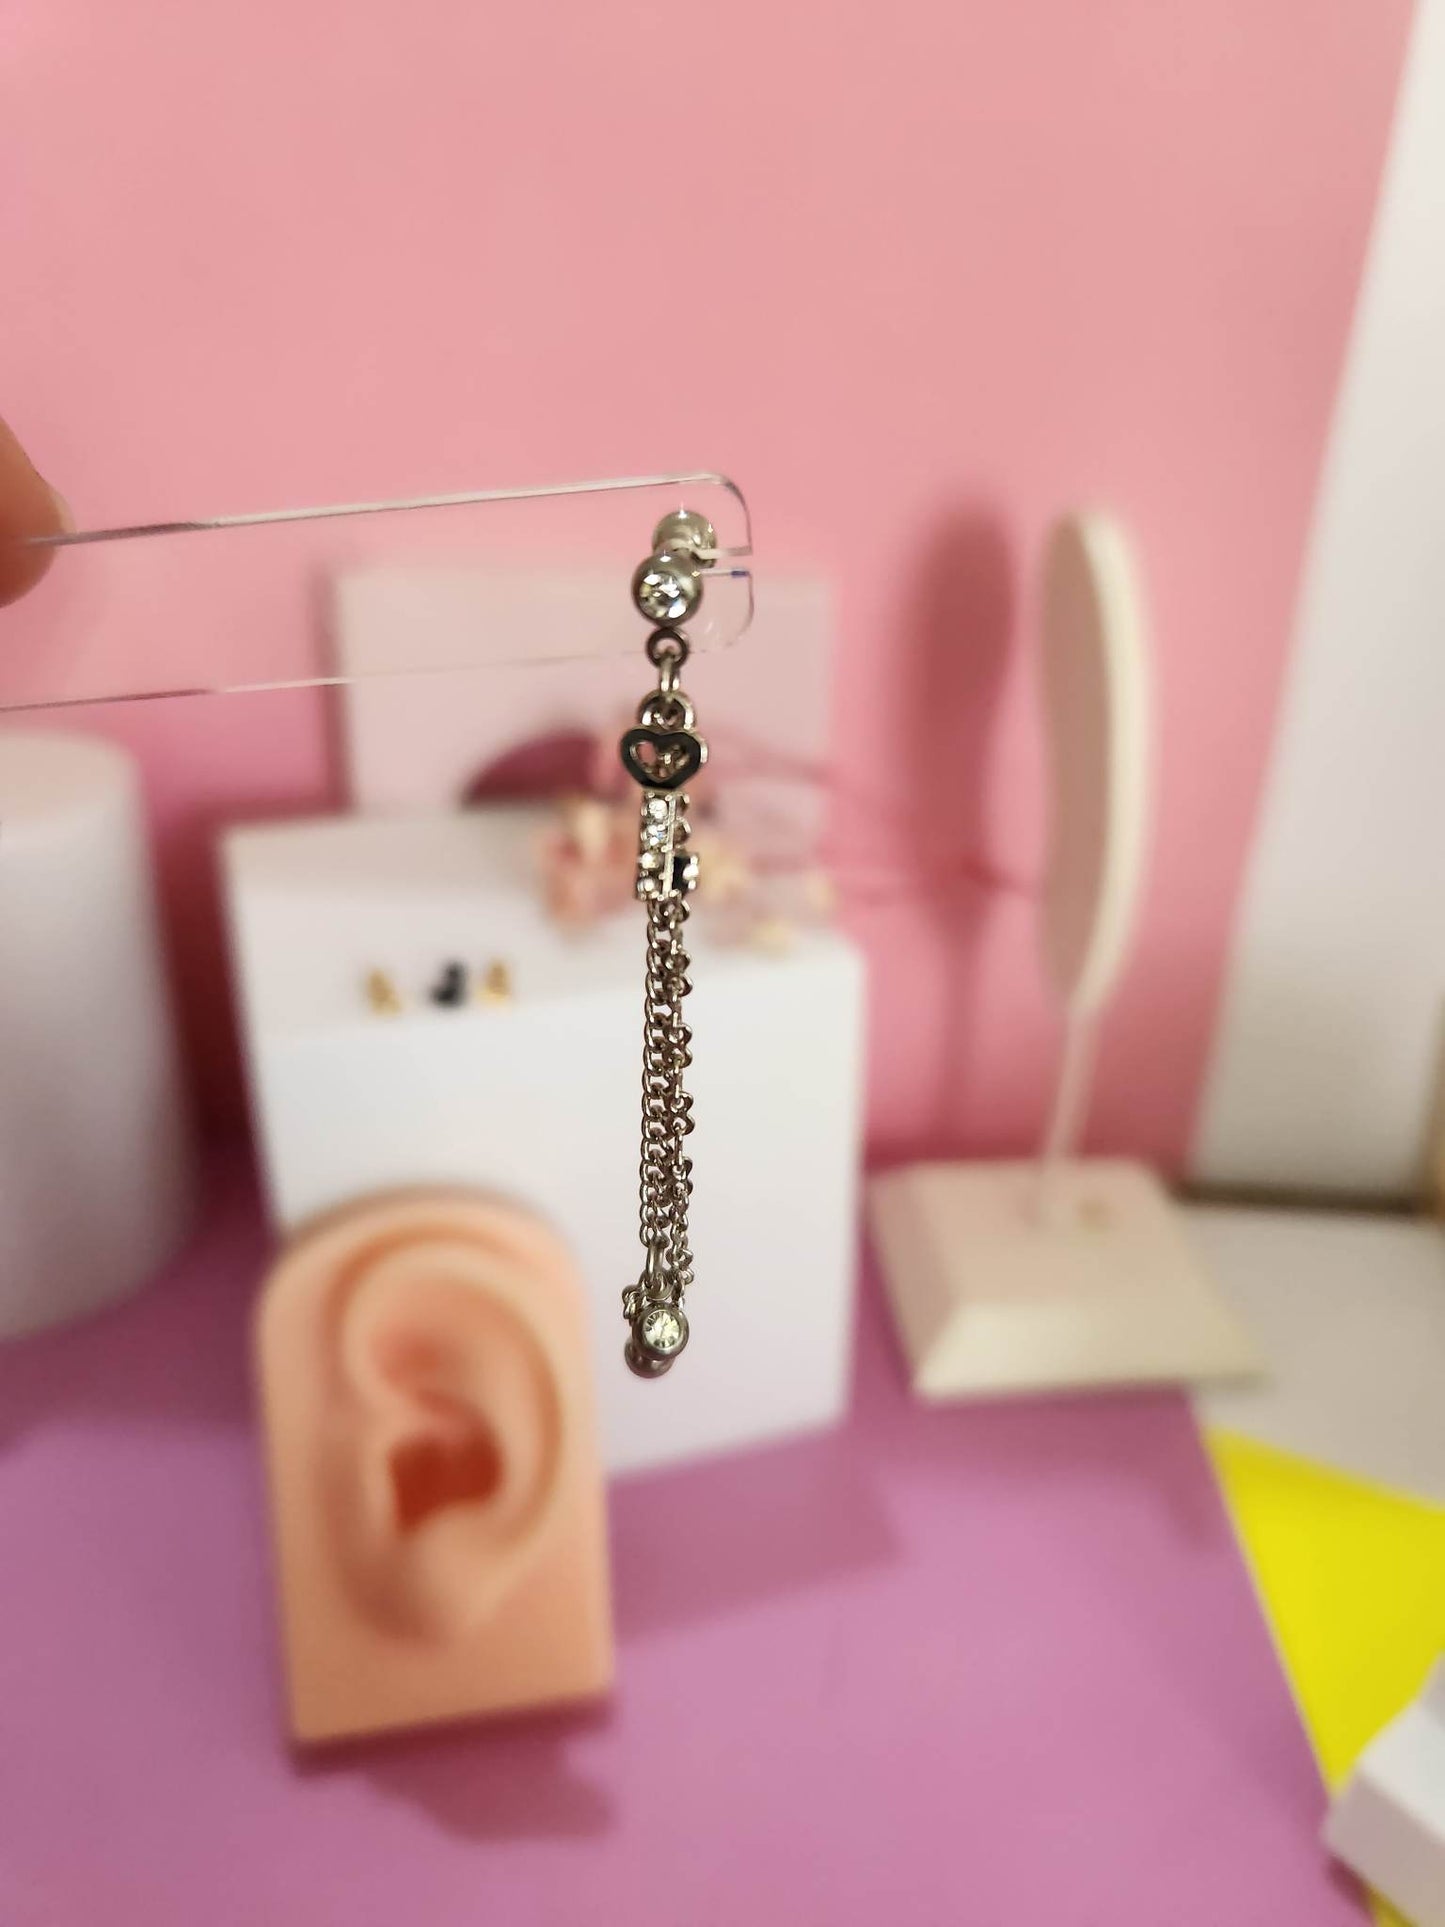 Double Gem Dangle Chain Lock and Key Tragus Cartilage Ear Piercing Bars 16g 6mm - Pierced n Proud